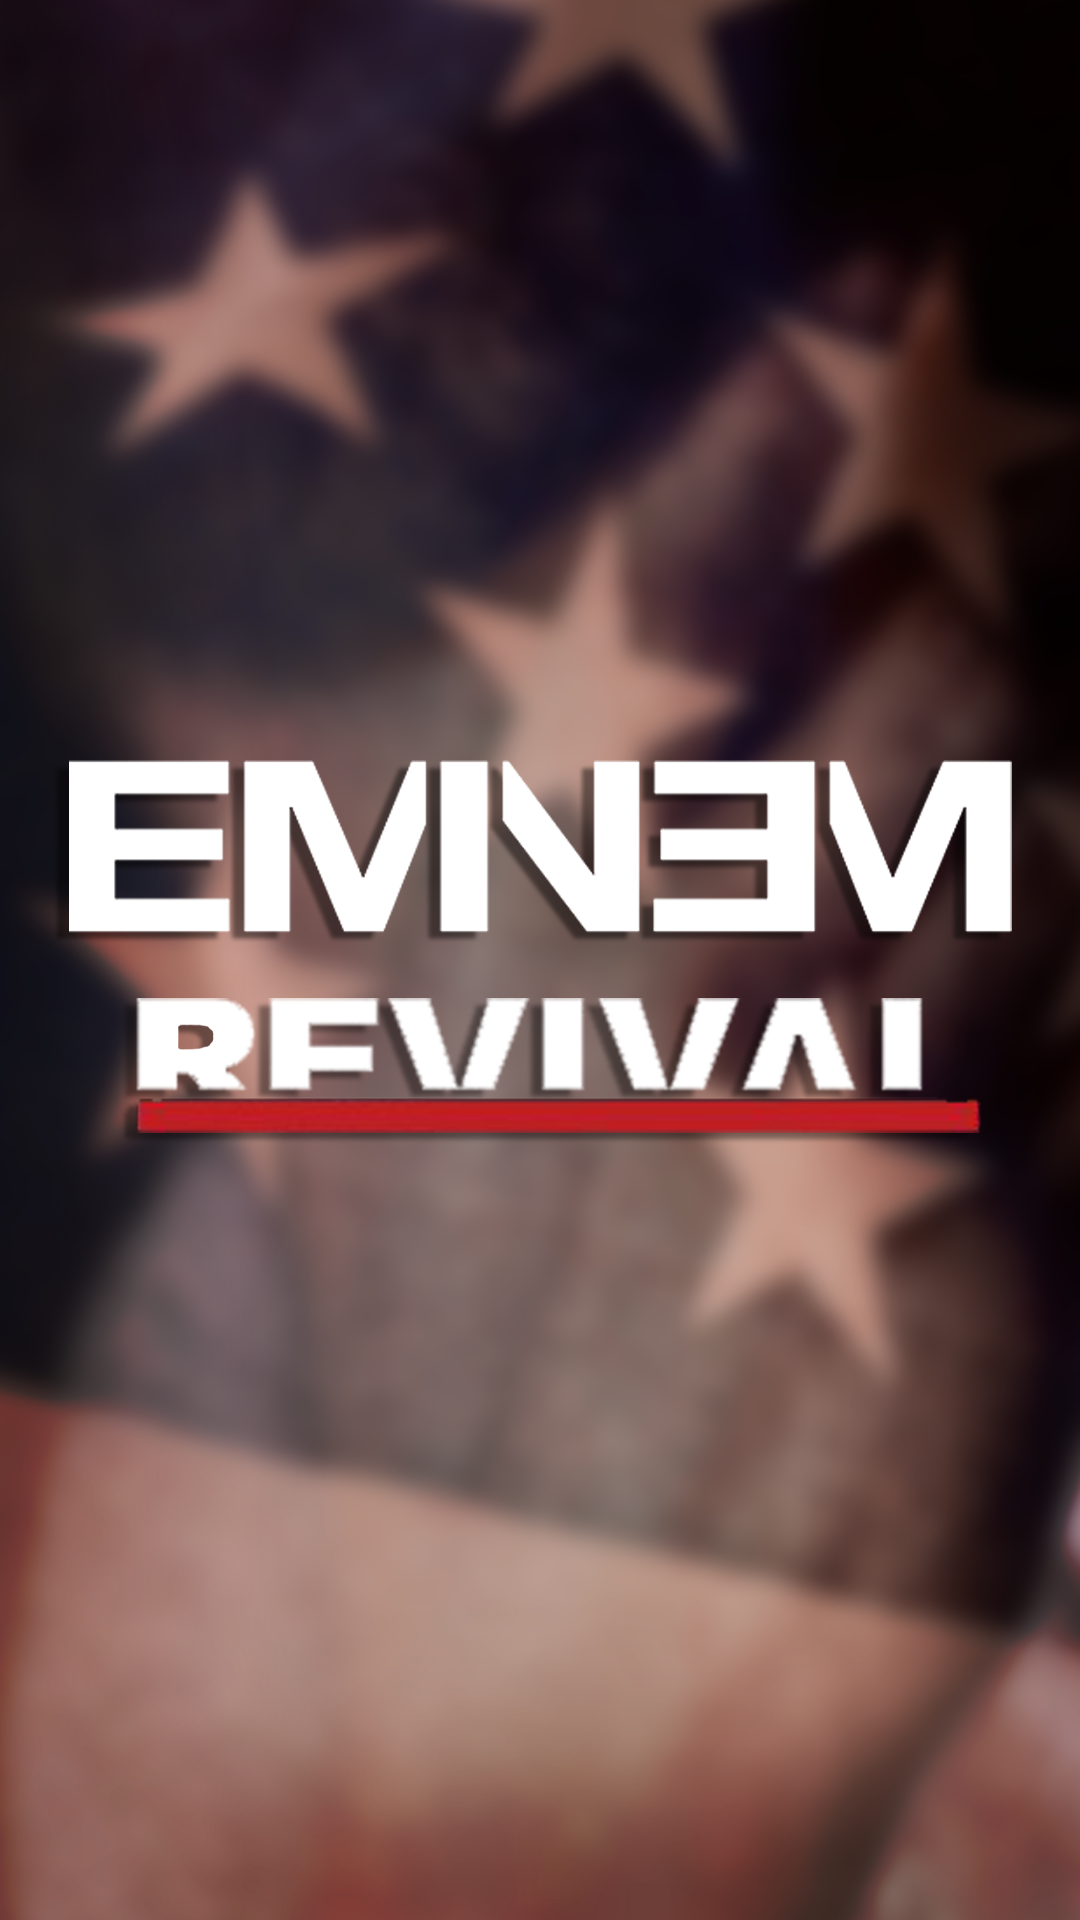 Eminem Revival Wallpaper Iphone - 1080x1920 Wallpaper 